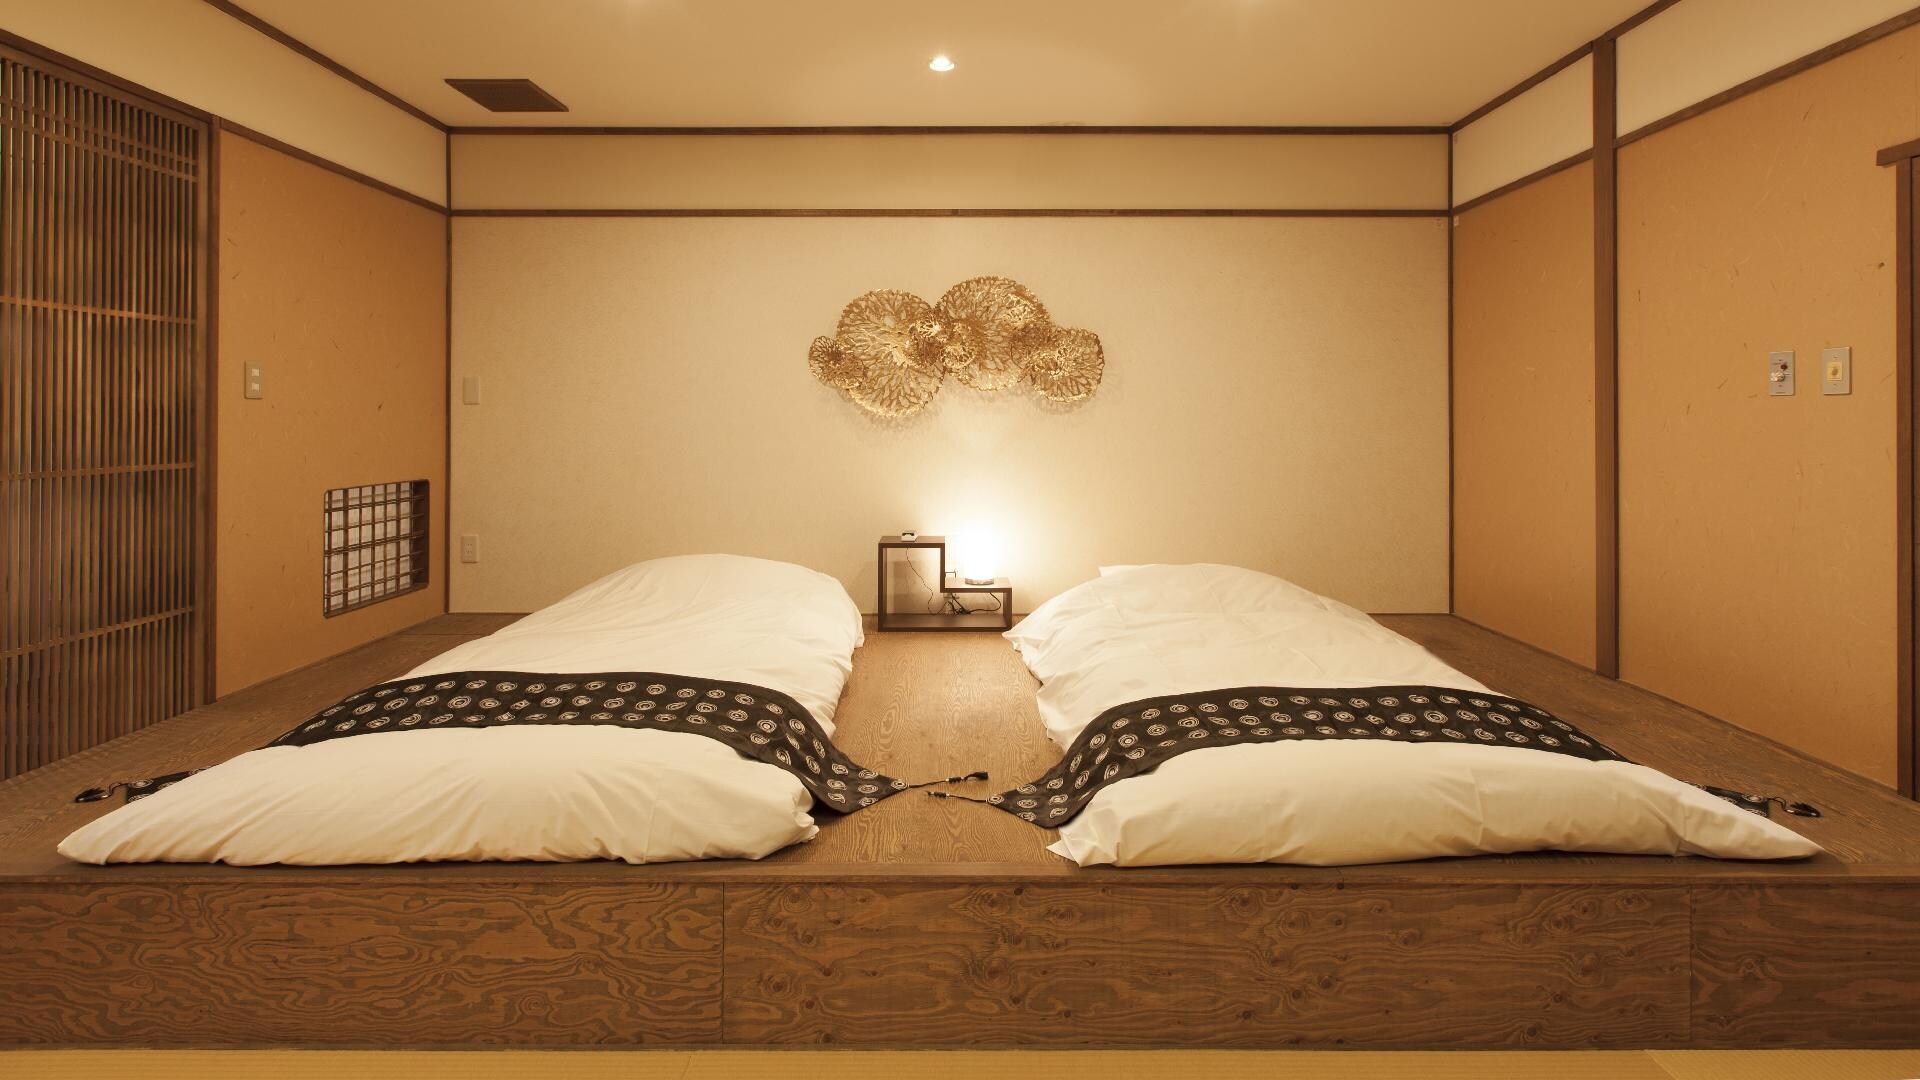 A modern Japanese room with a futon on the raised floor